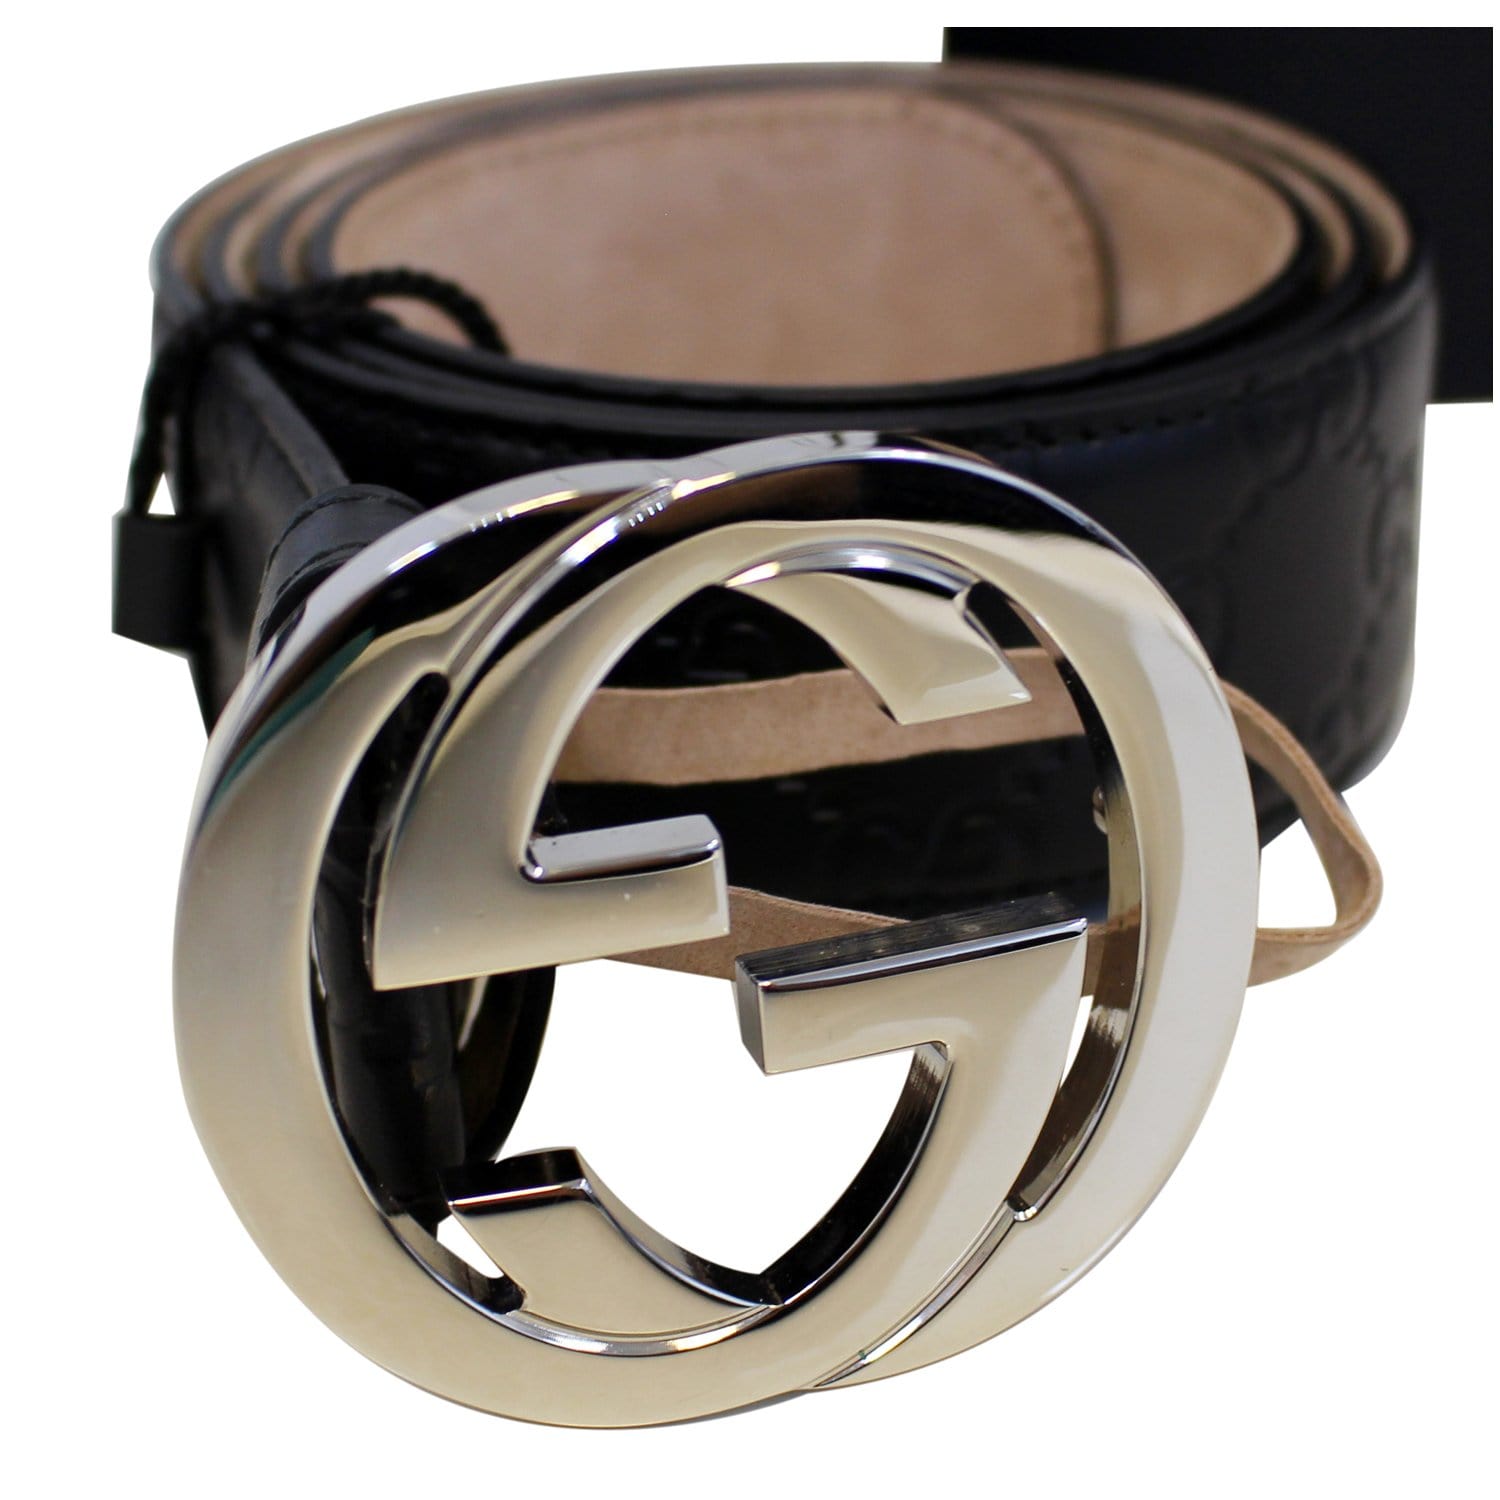 Gucci, Accessories, Authentic Gucci Logo Leather Belt